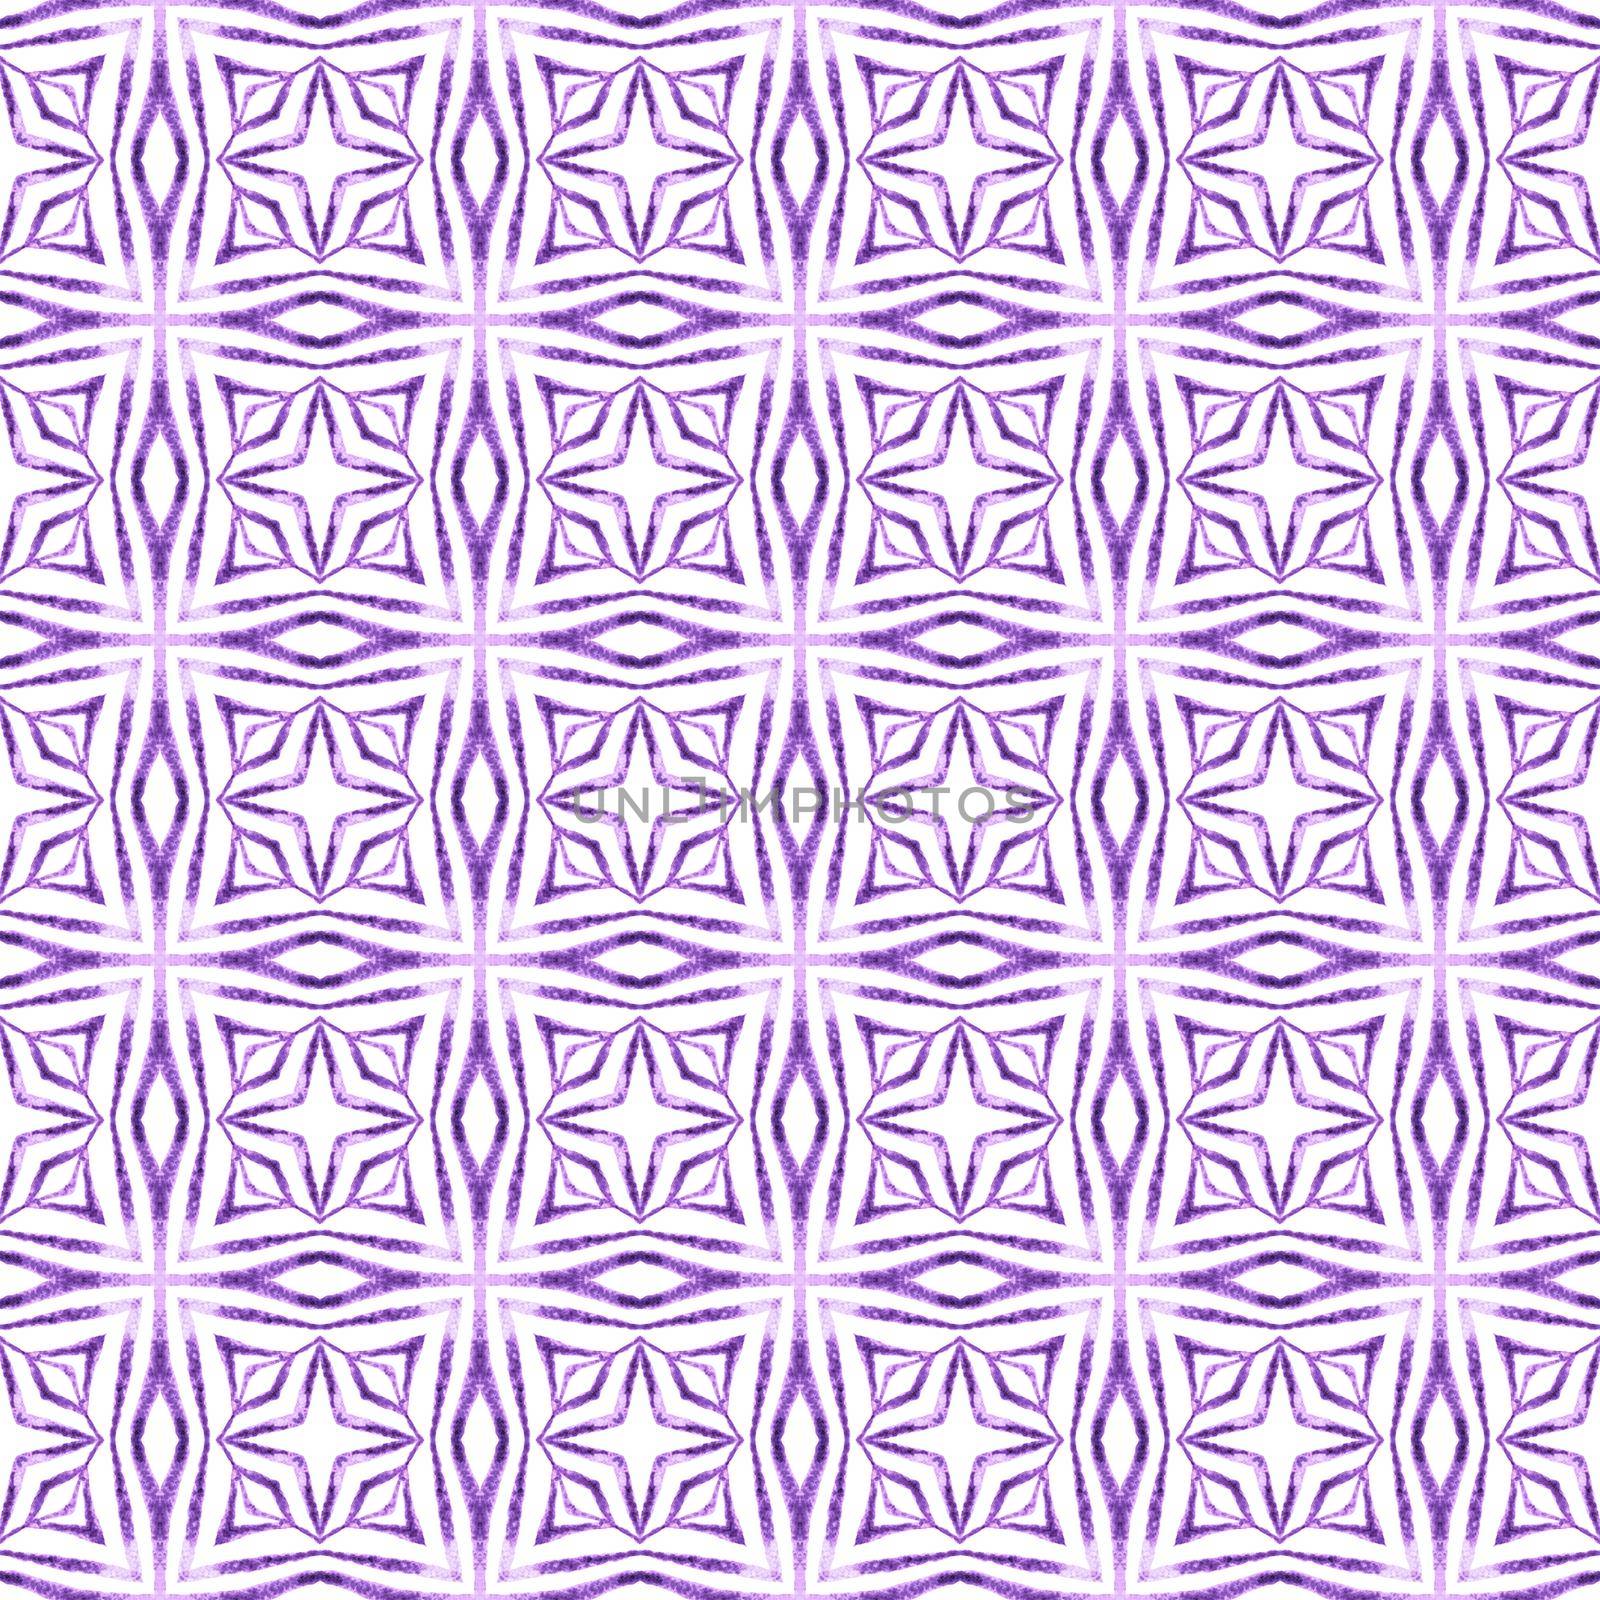 Textile ready comely print, swimwear fabric, wallpaper, wrapping. Purple beautiful boho chic summer design. Arabesque hand drawn design. Oriental arabesque hand drawn border.